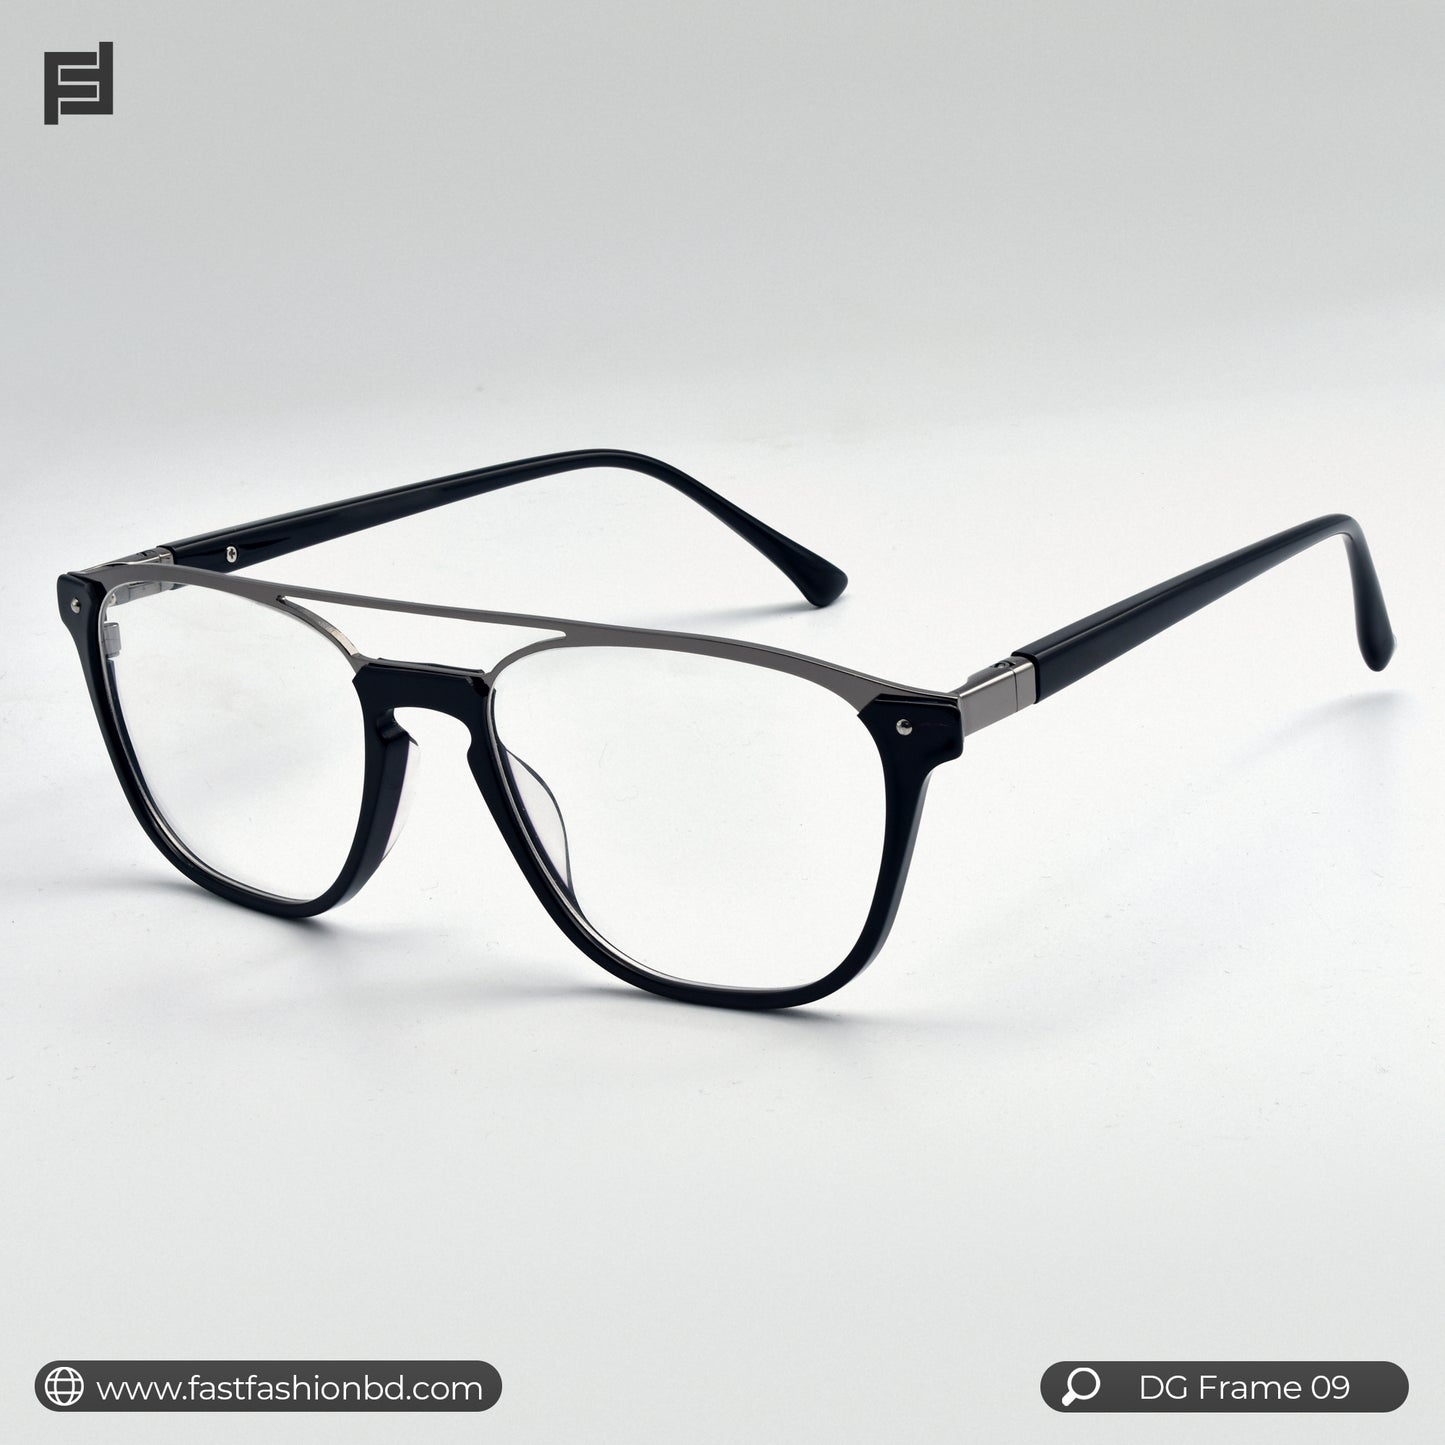 Premium Quality Eyeglass Optic Frame - DG Frame 09